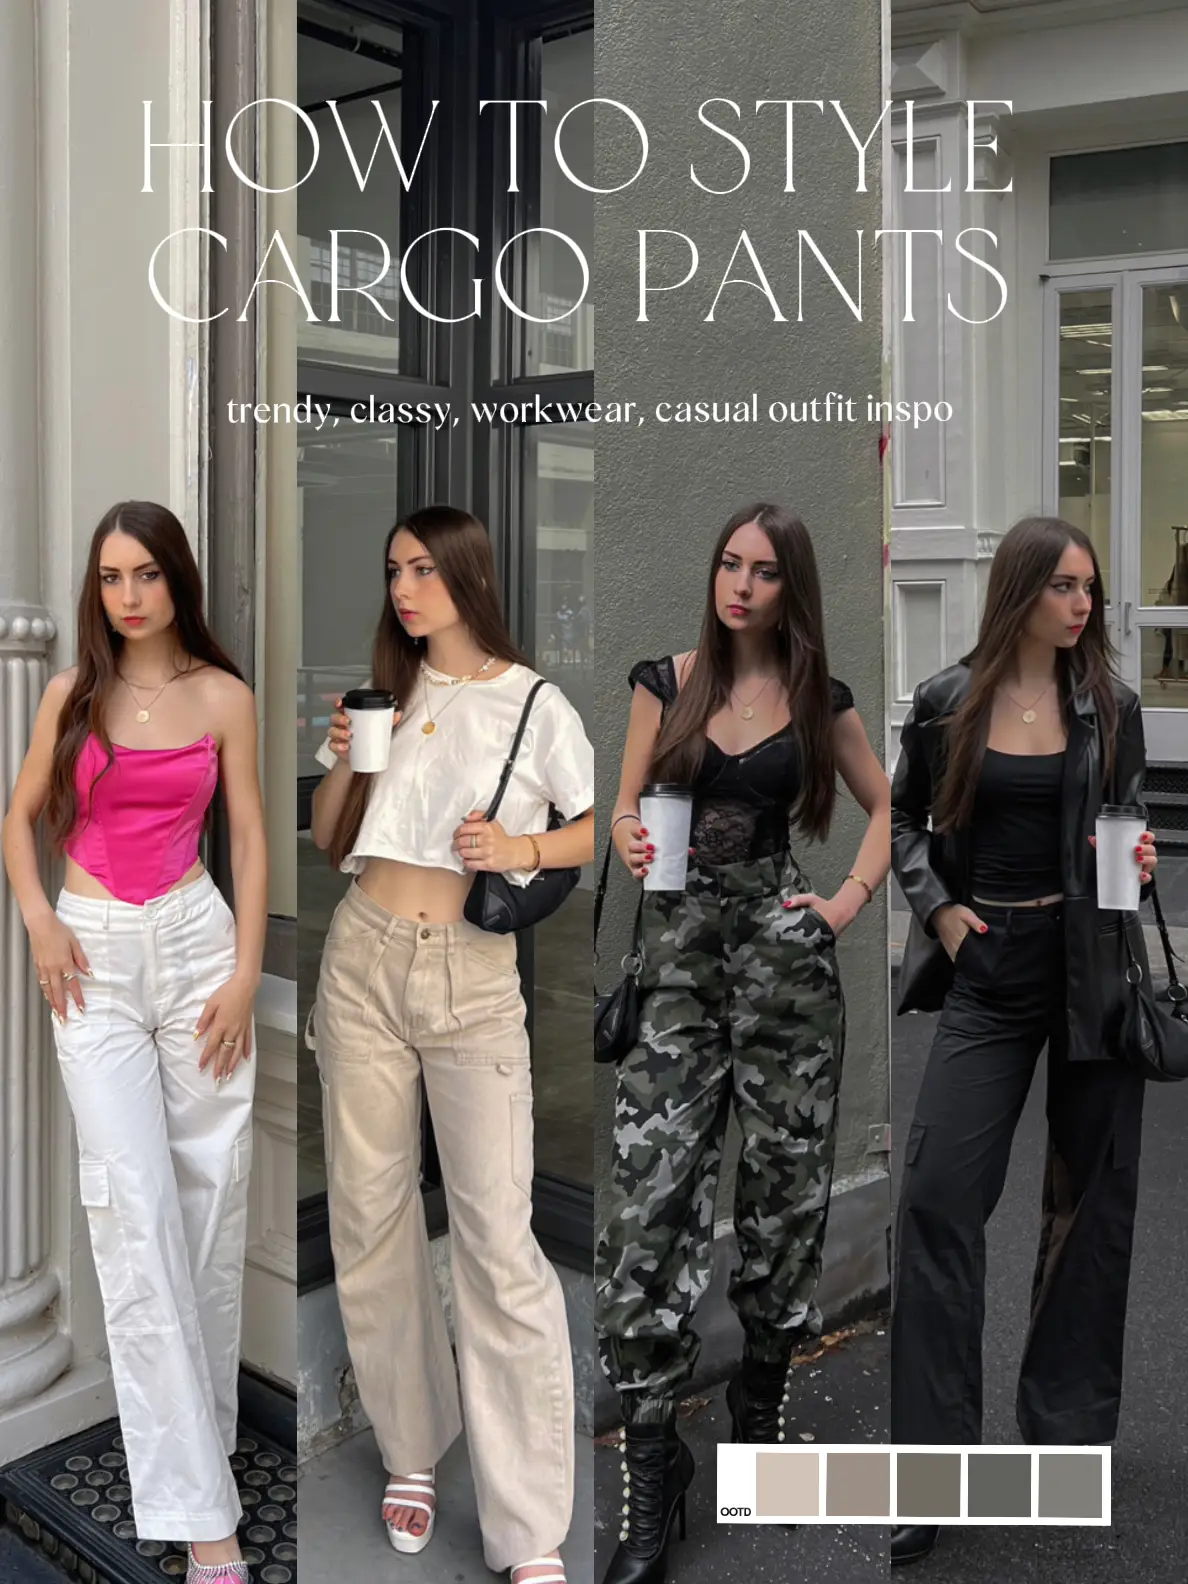 10 Black cargo pants ideas  cute outfits, black cargo pants, fashion inspo  outfits